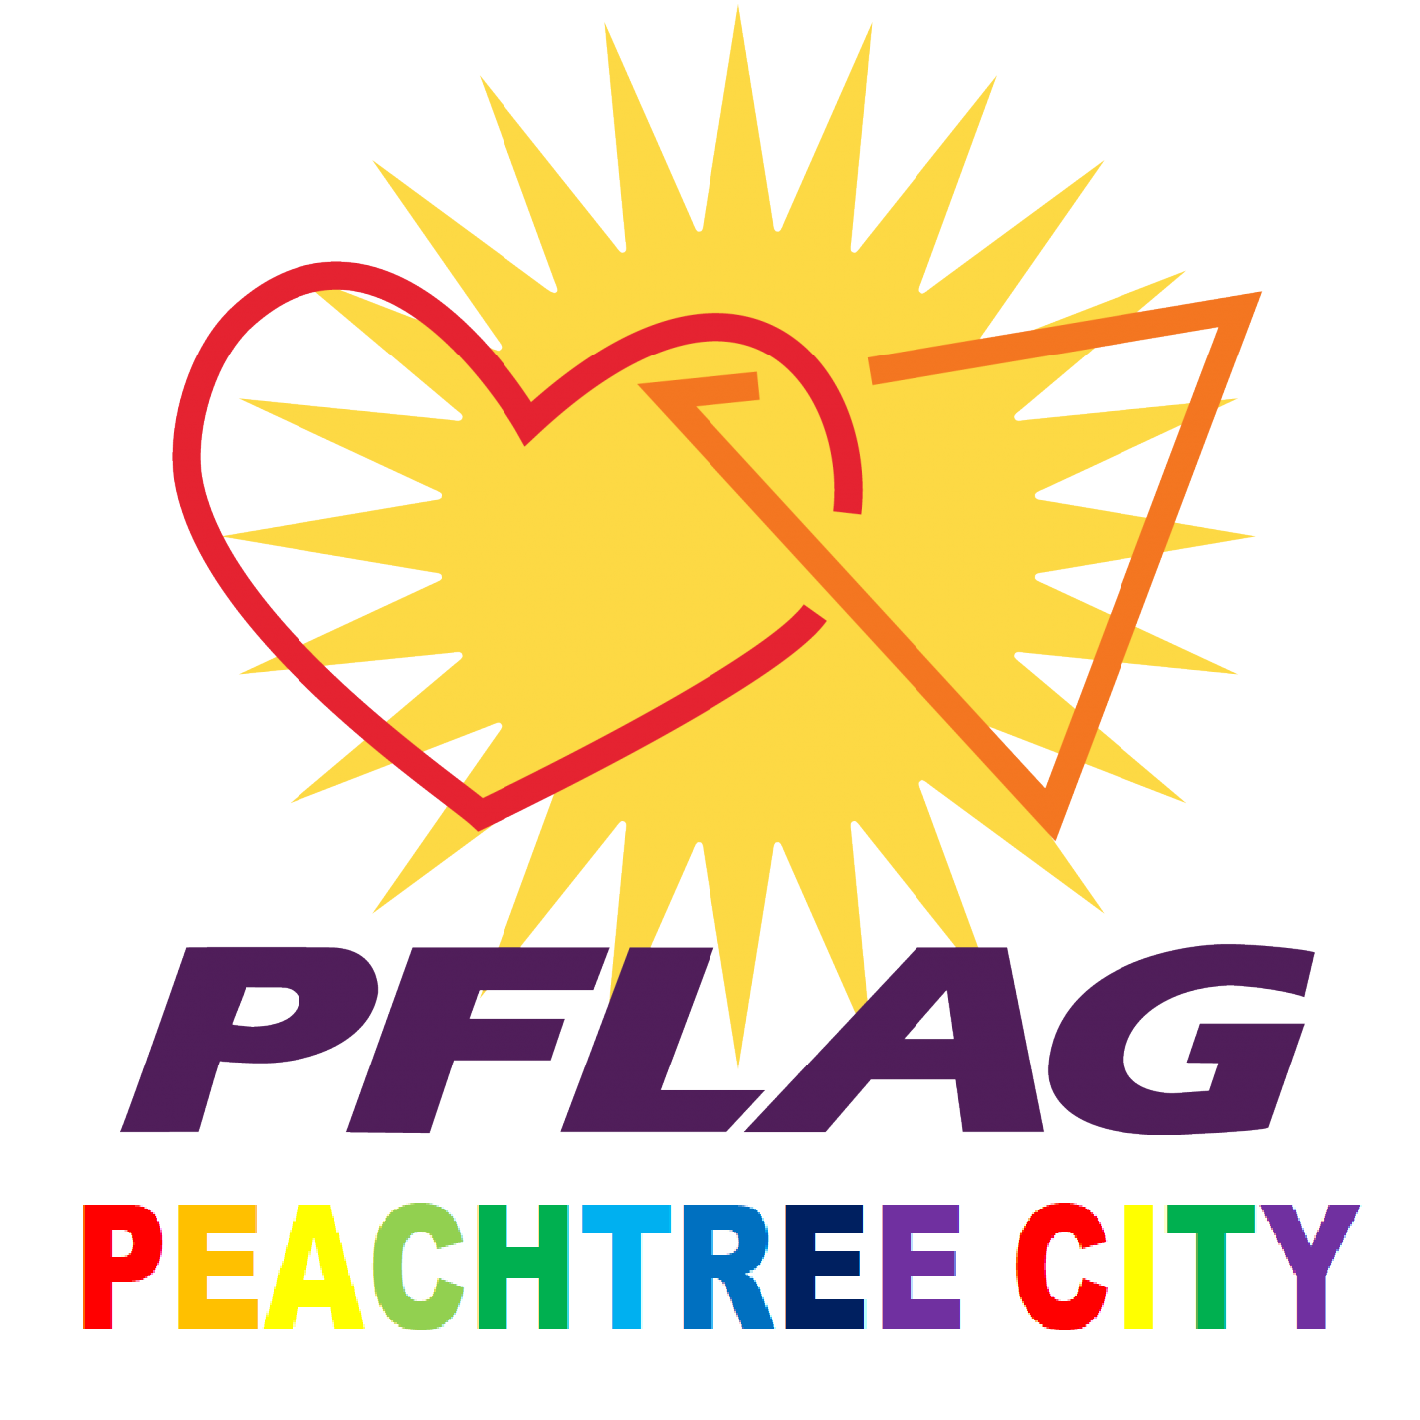 LGBTQ Organizations in Atlanta Georgia - PFLAG Peachtree City